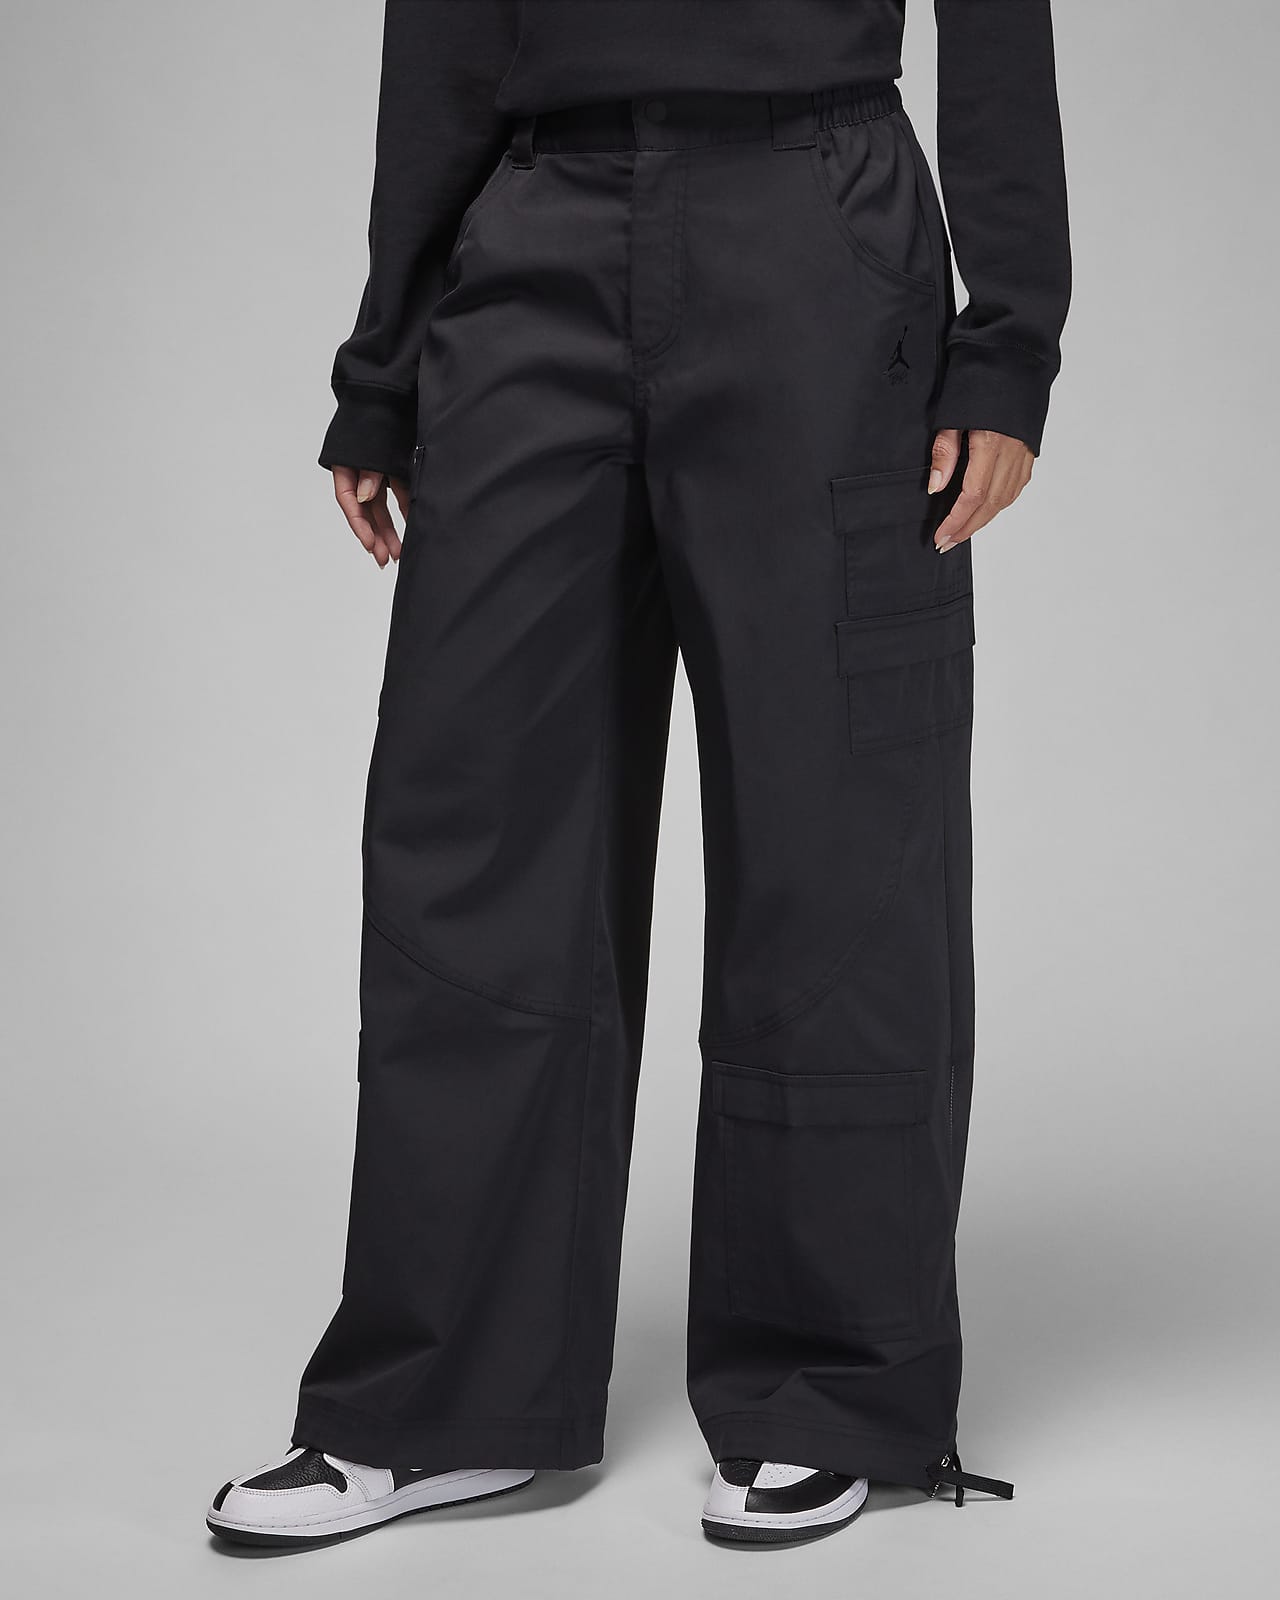 Black Linen And White Linen Premium Lounge Pants For Men